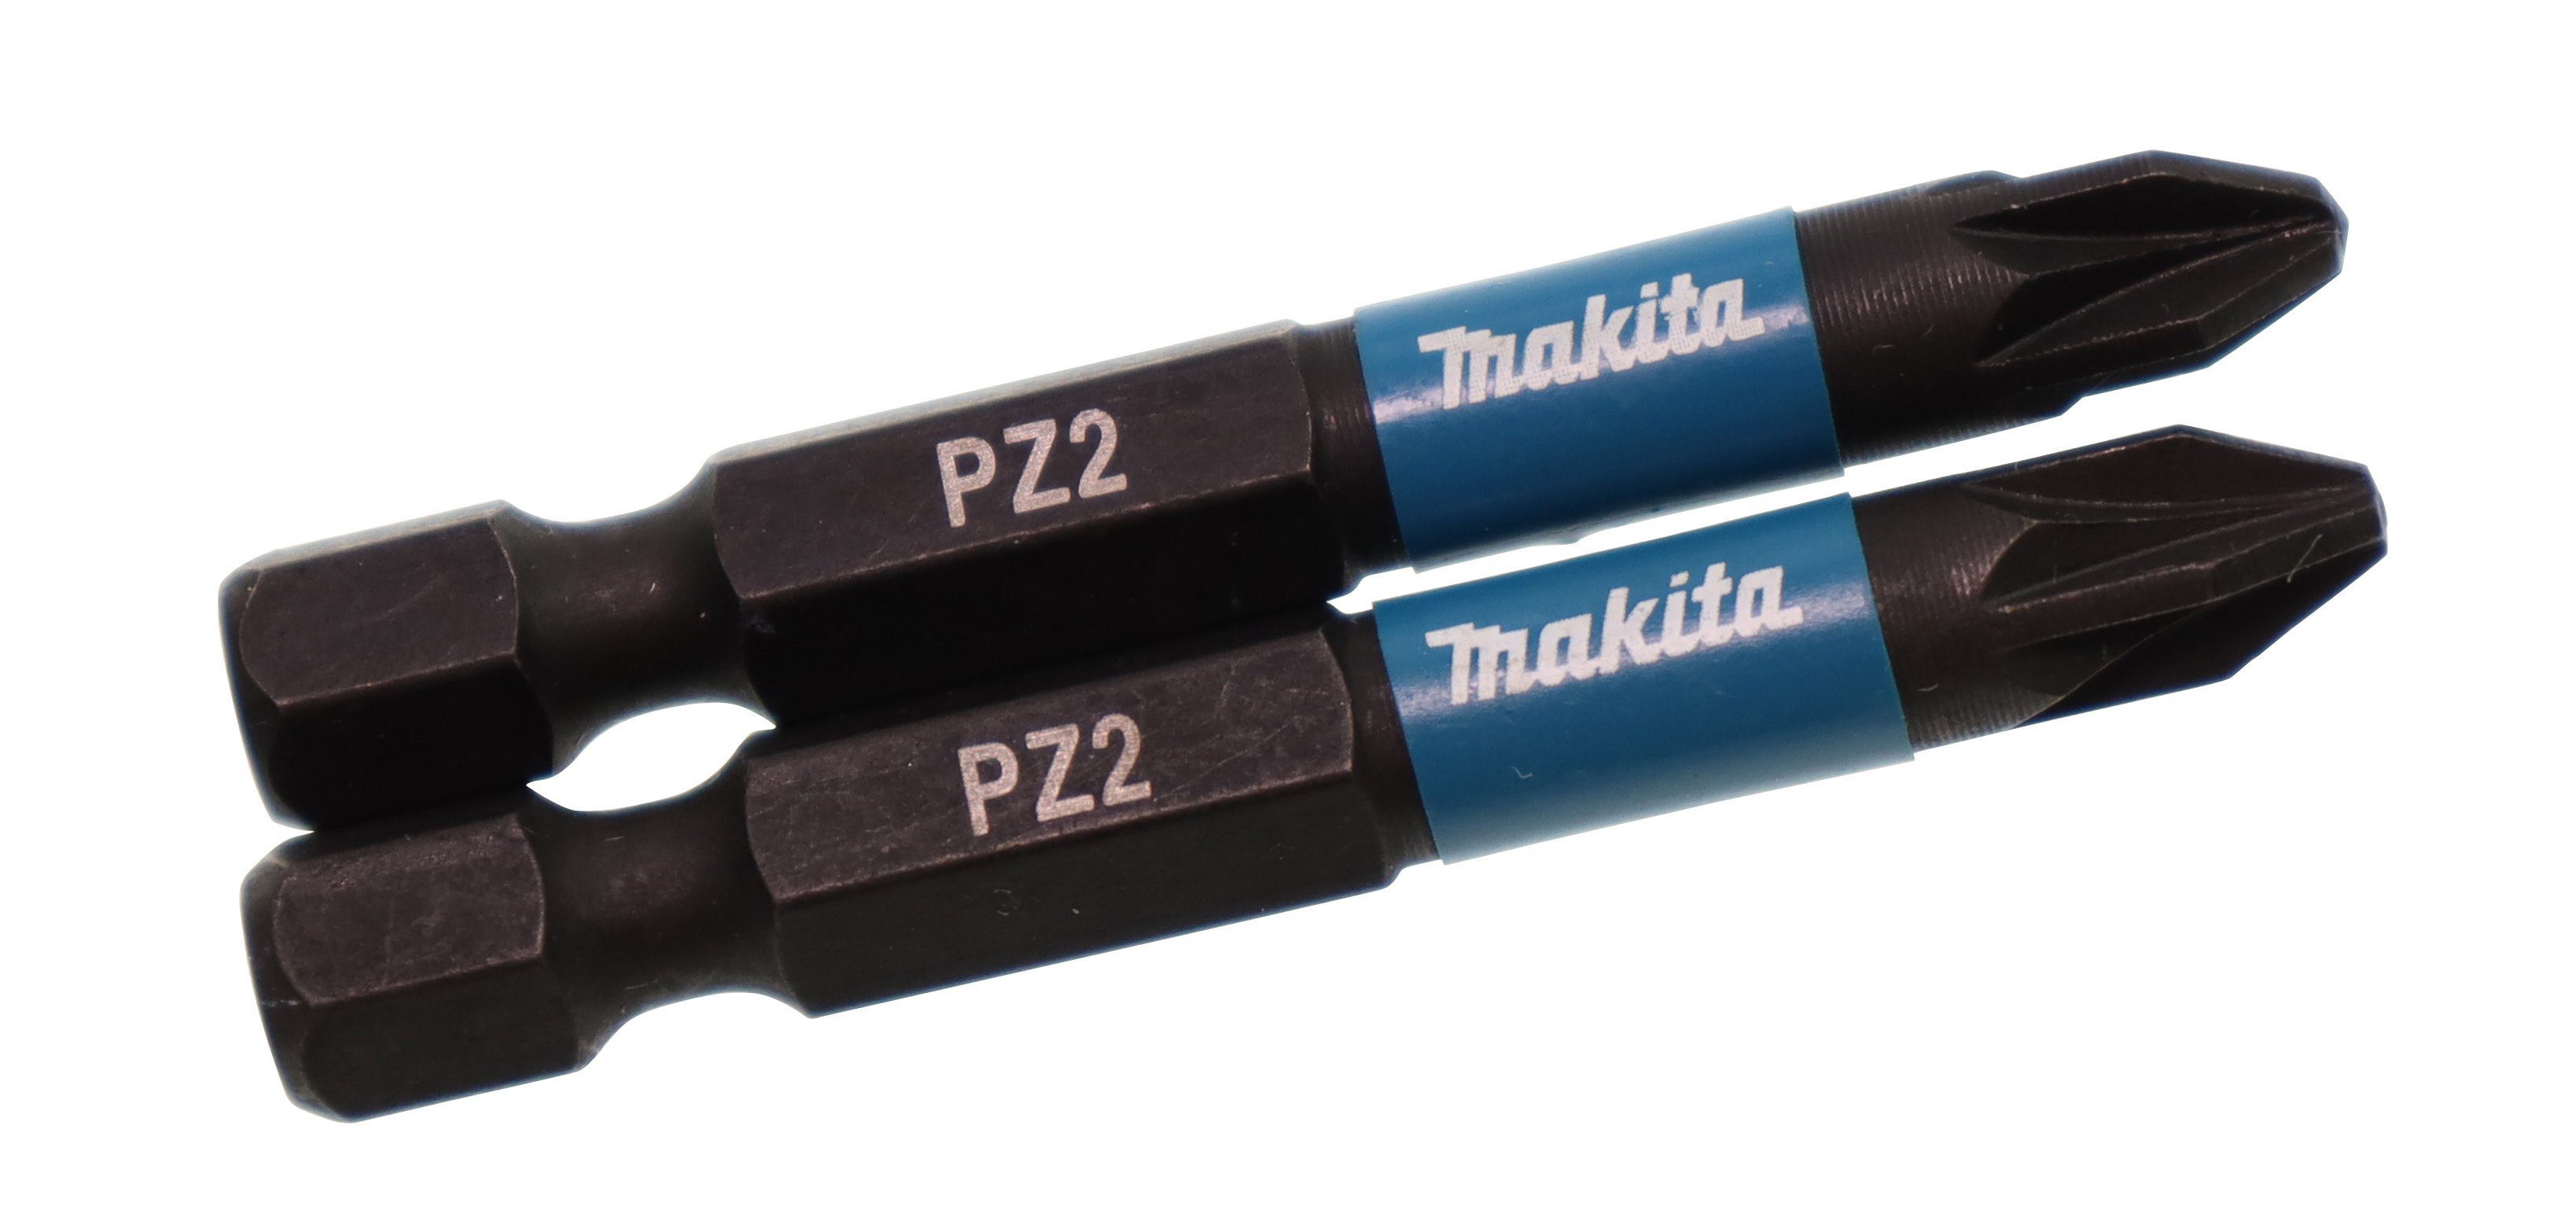 B-63753 Bohrer- Makita Black, Impact Makita Stück, 2x50 PZ2 2 Bit Bit-Set und S2-Spezialstahl